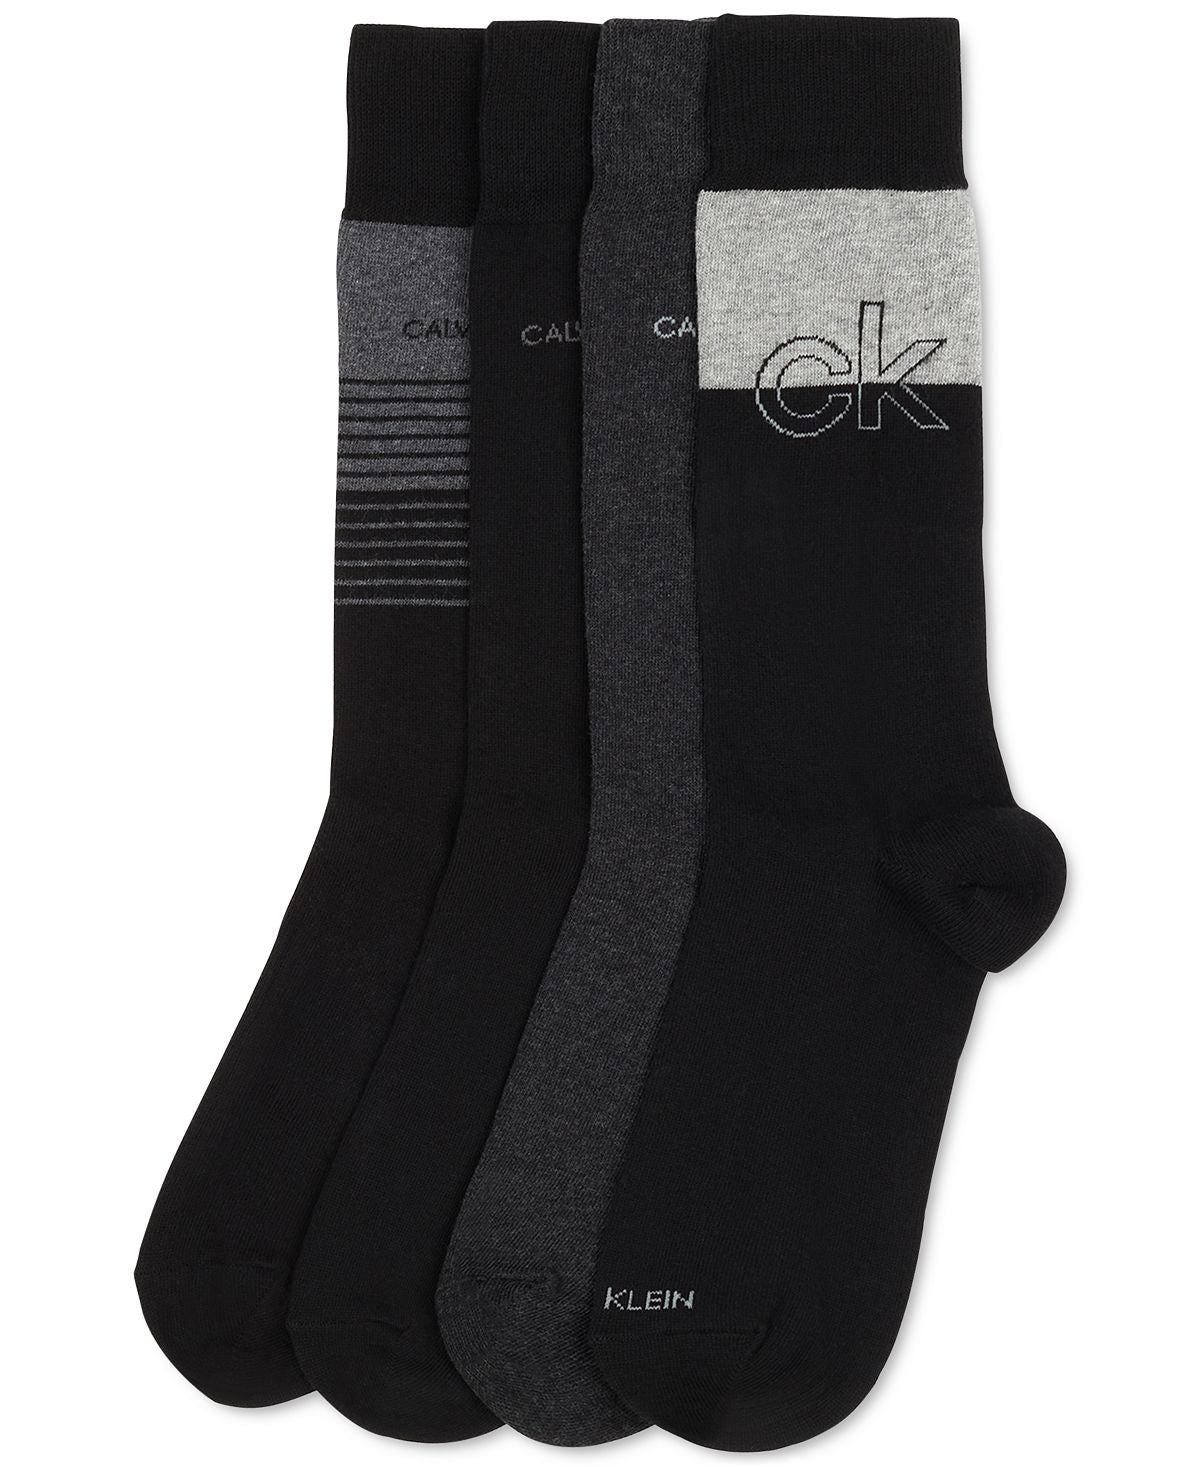 Calvin Klein 4-pk. Iconic Logo Dress Crew Socks Black Assorted